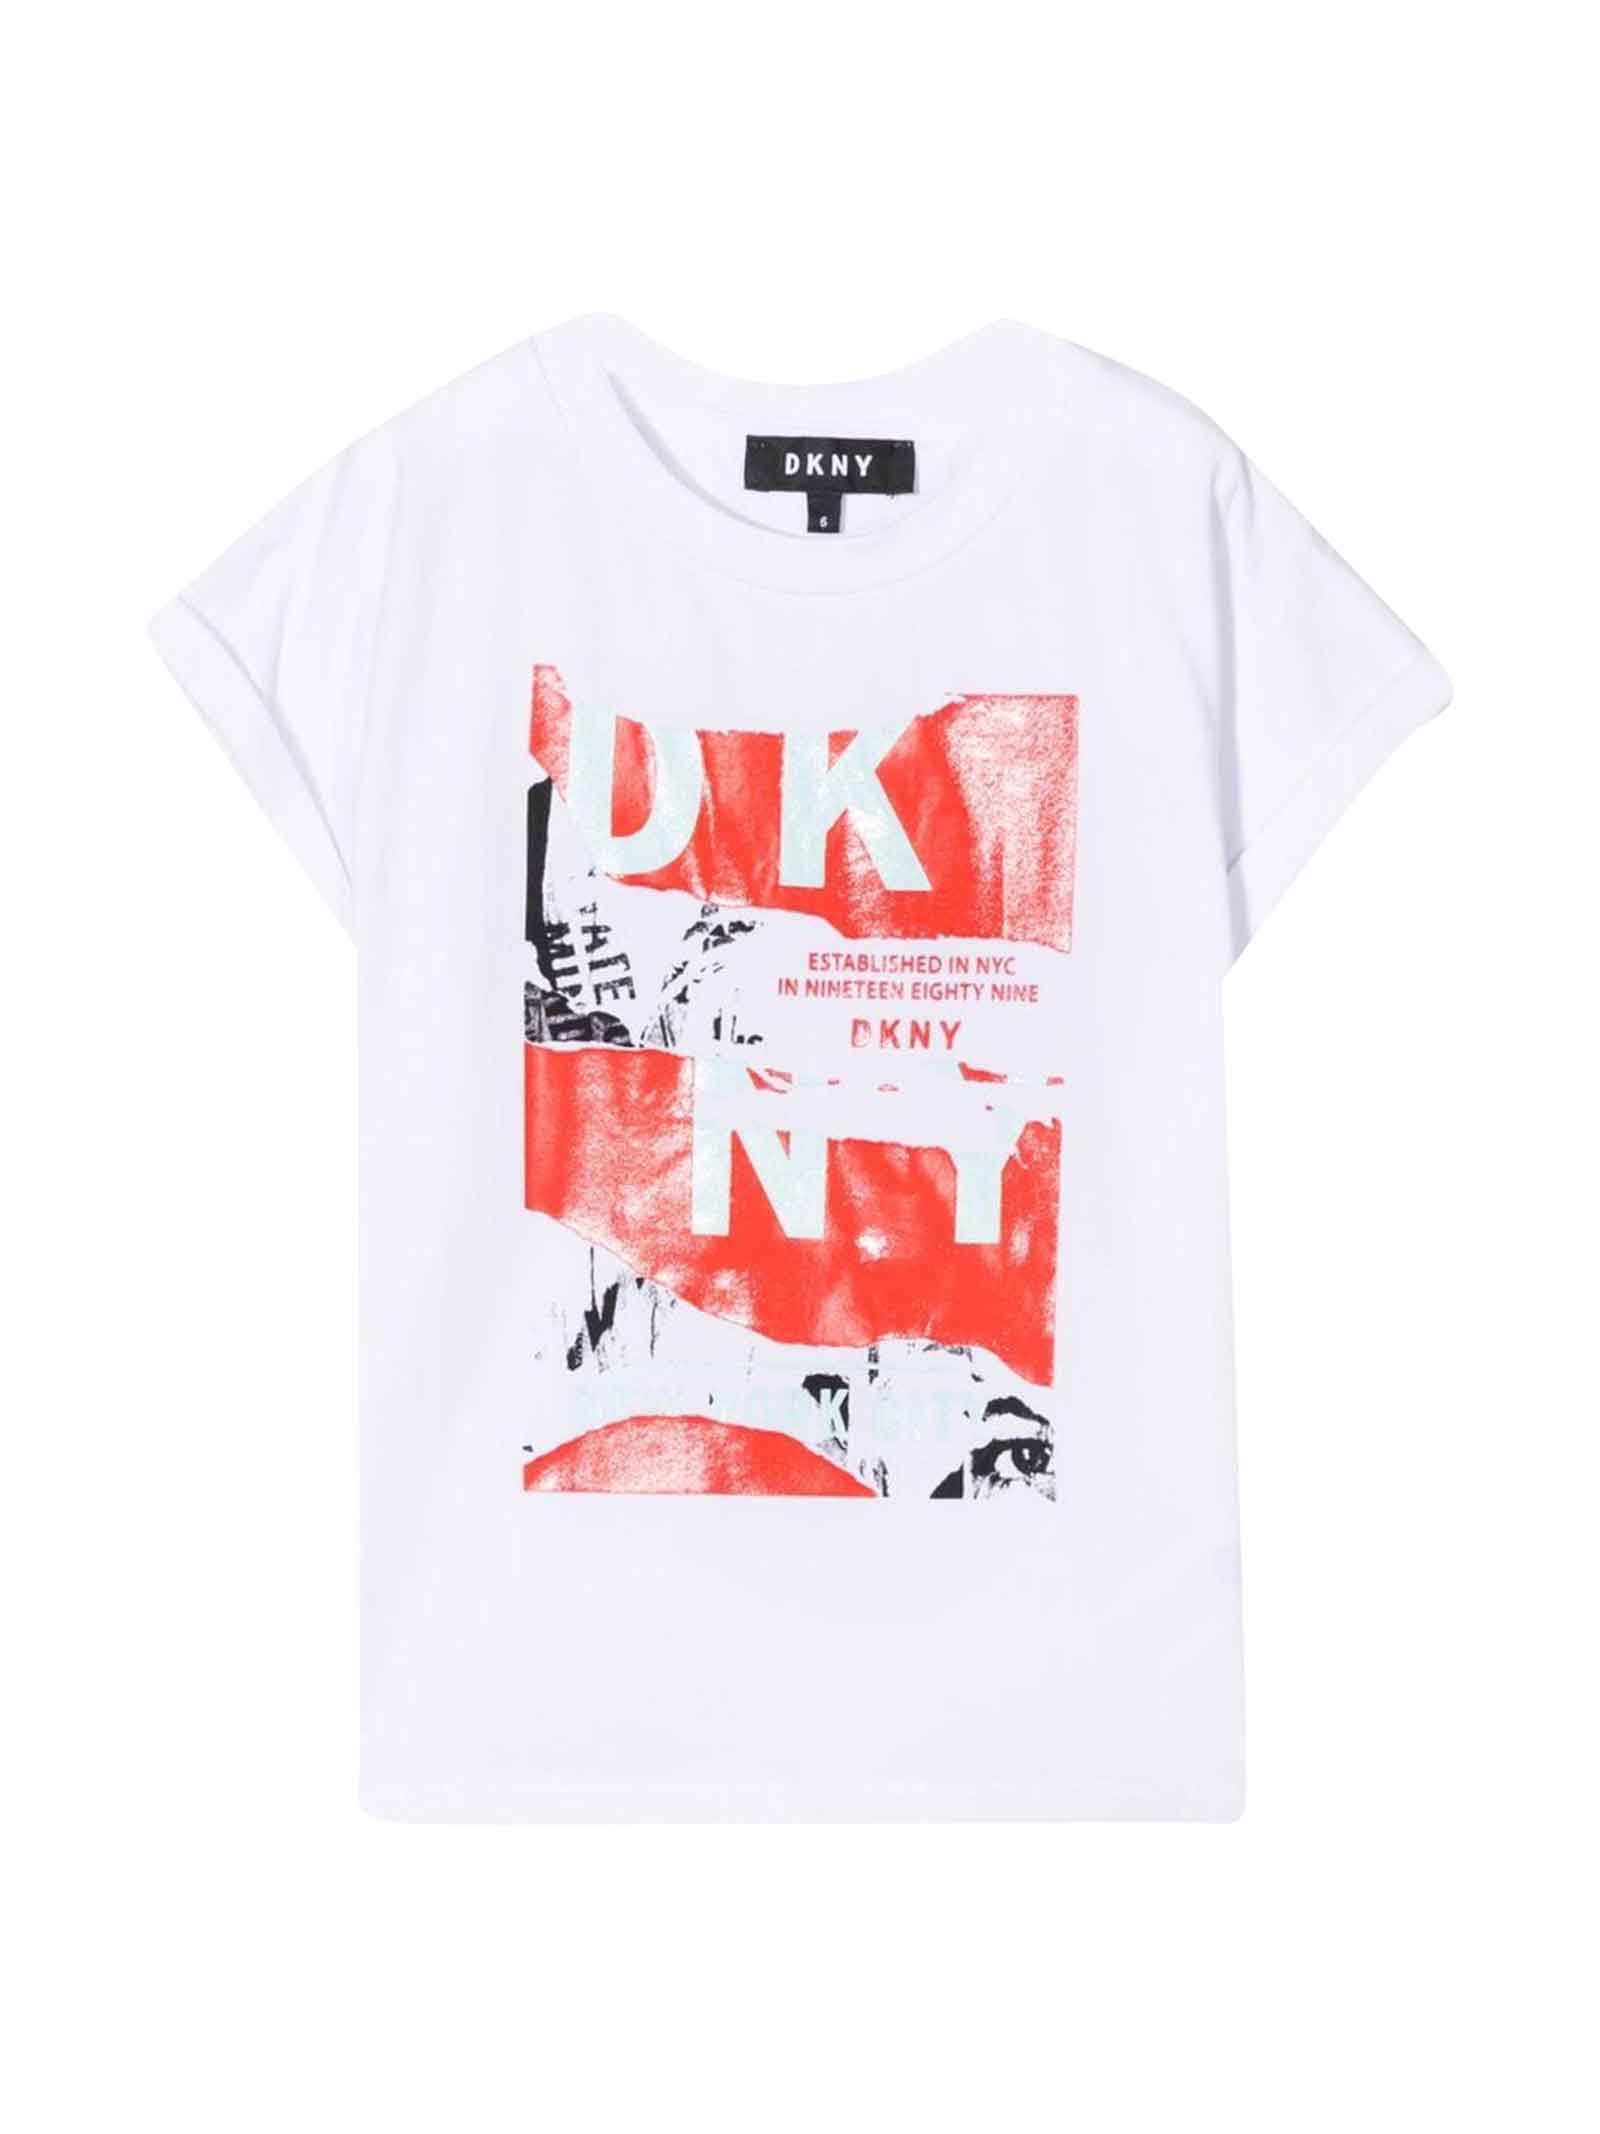 DKNY Unisex White T-shirt